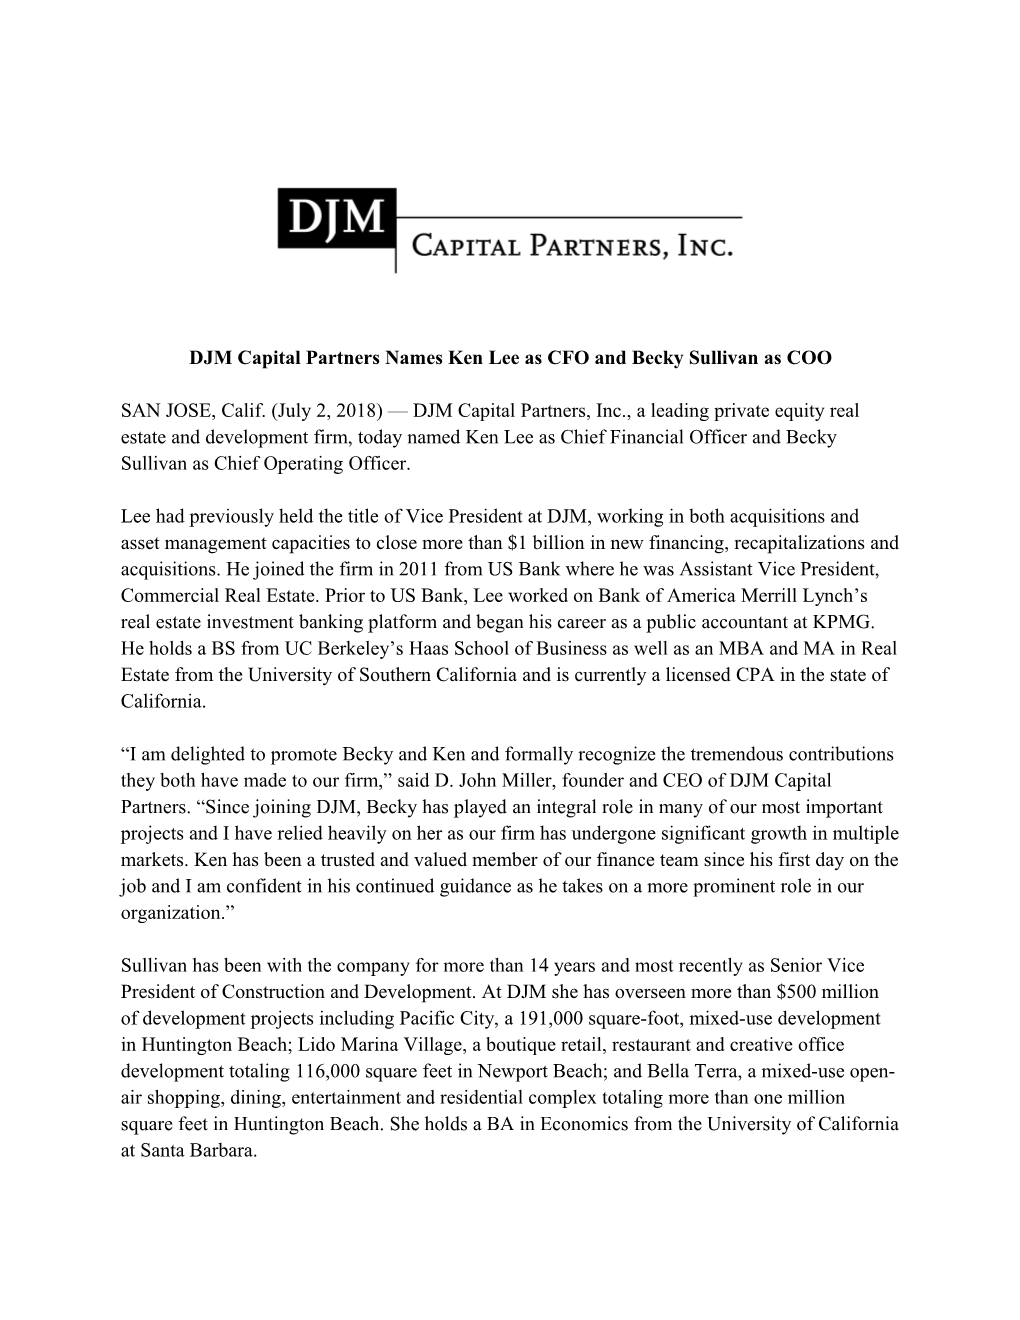 DJM Capital Partners Names Ken Lee As CFO and Becky Sullivan As COO